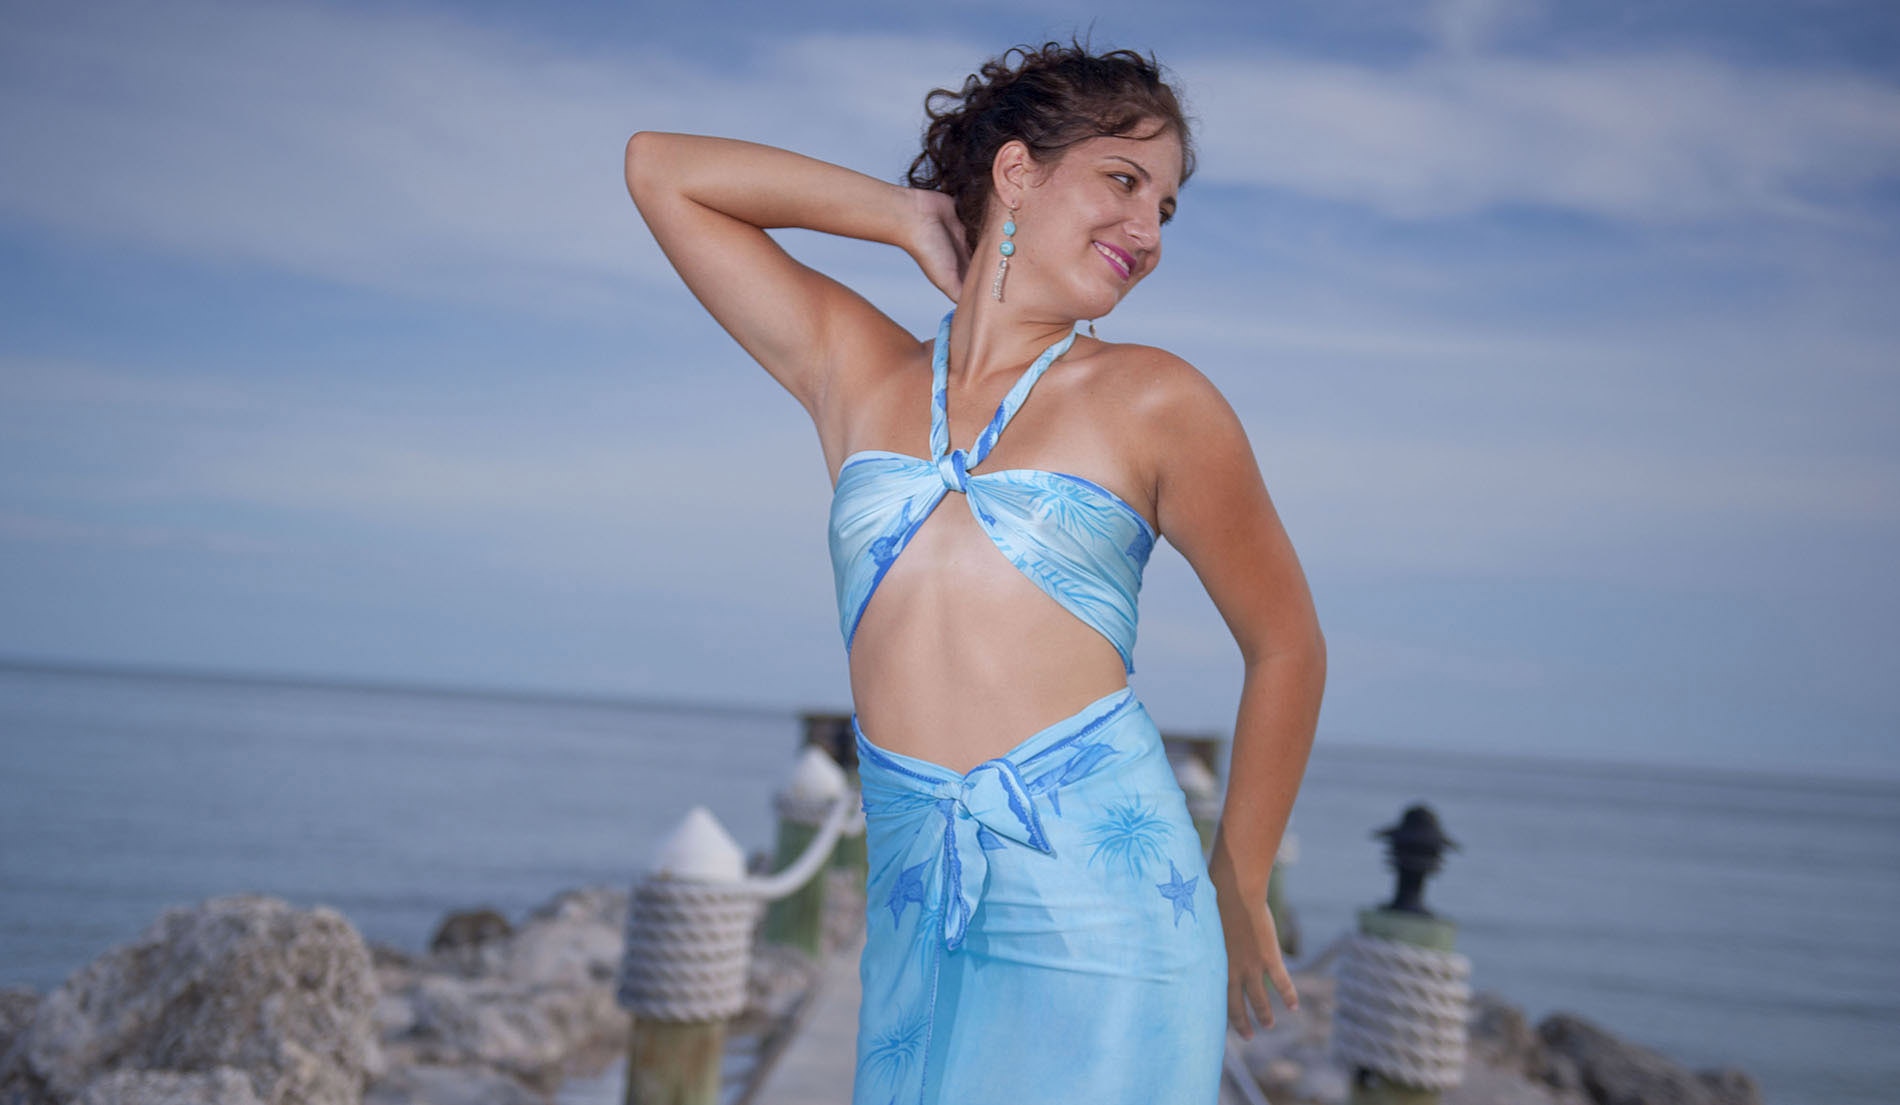 custom wedding sarongs - SINGLE-SARONG DRESS LOOKS - Look 3 front